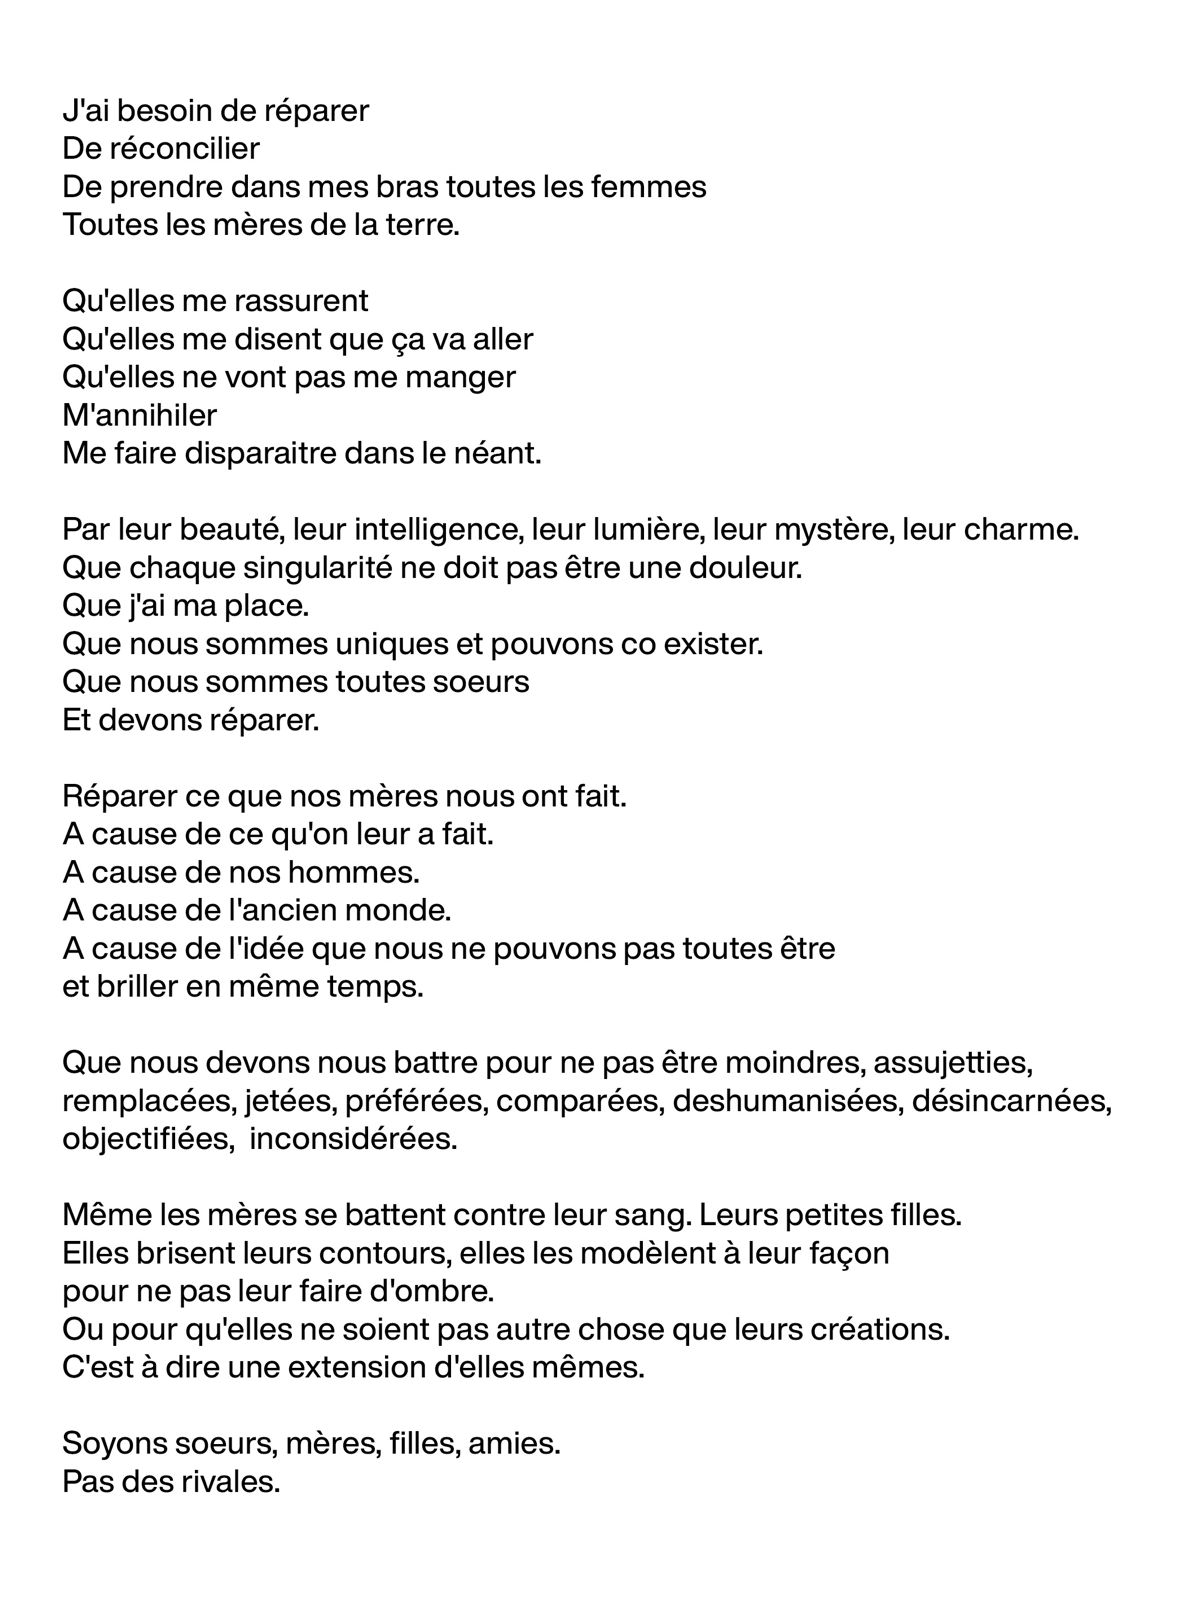 MaisonSoeurs_BlandineDenis_Soeurs_Poeme